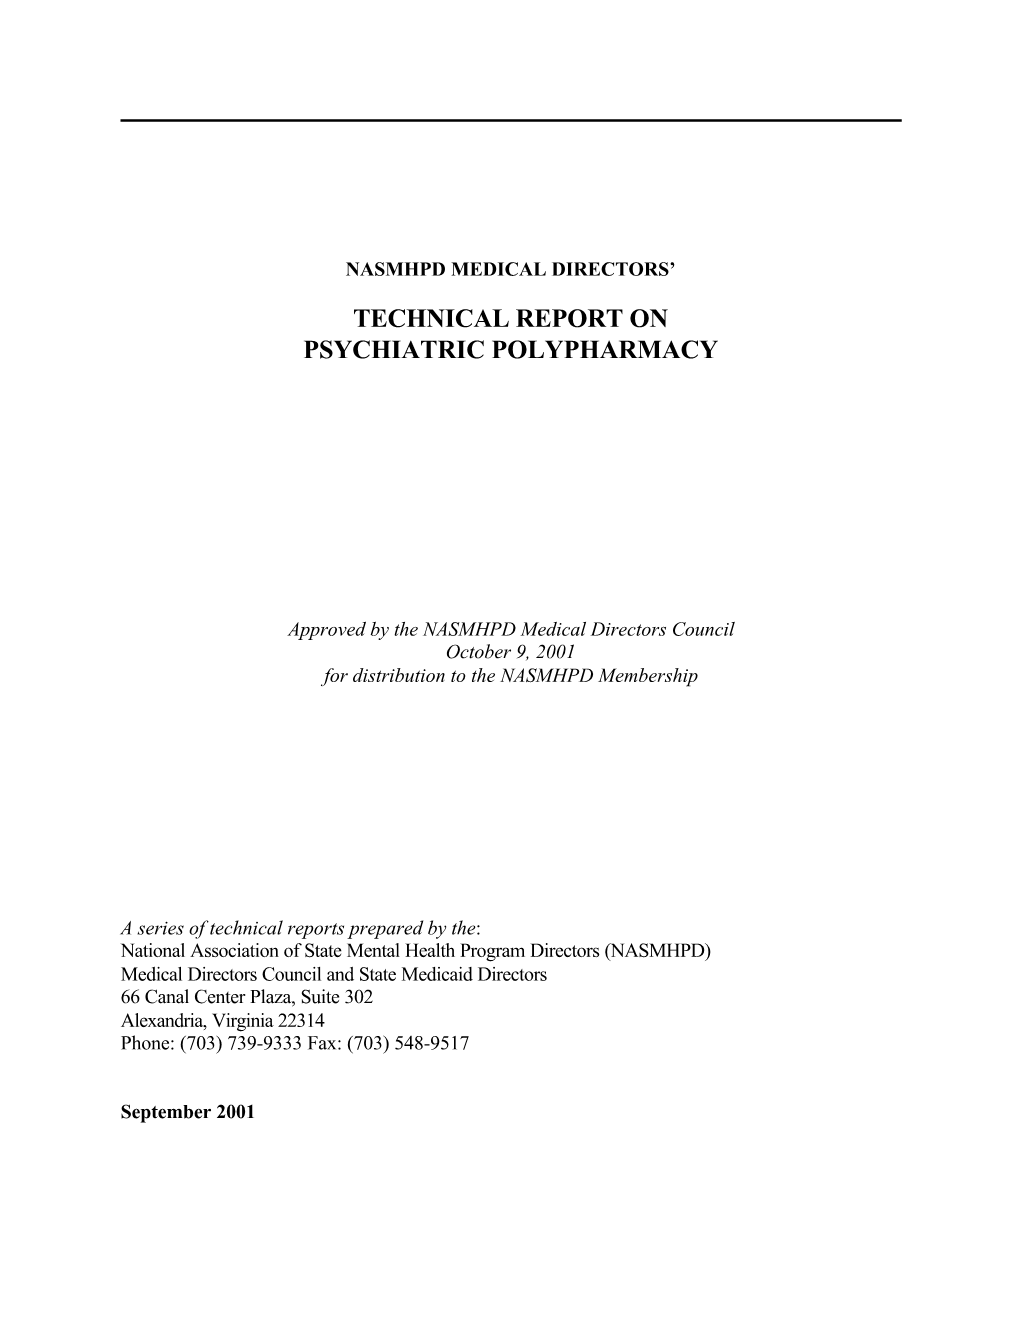 Technical Report on Psychiatric Polypharmacy